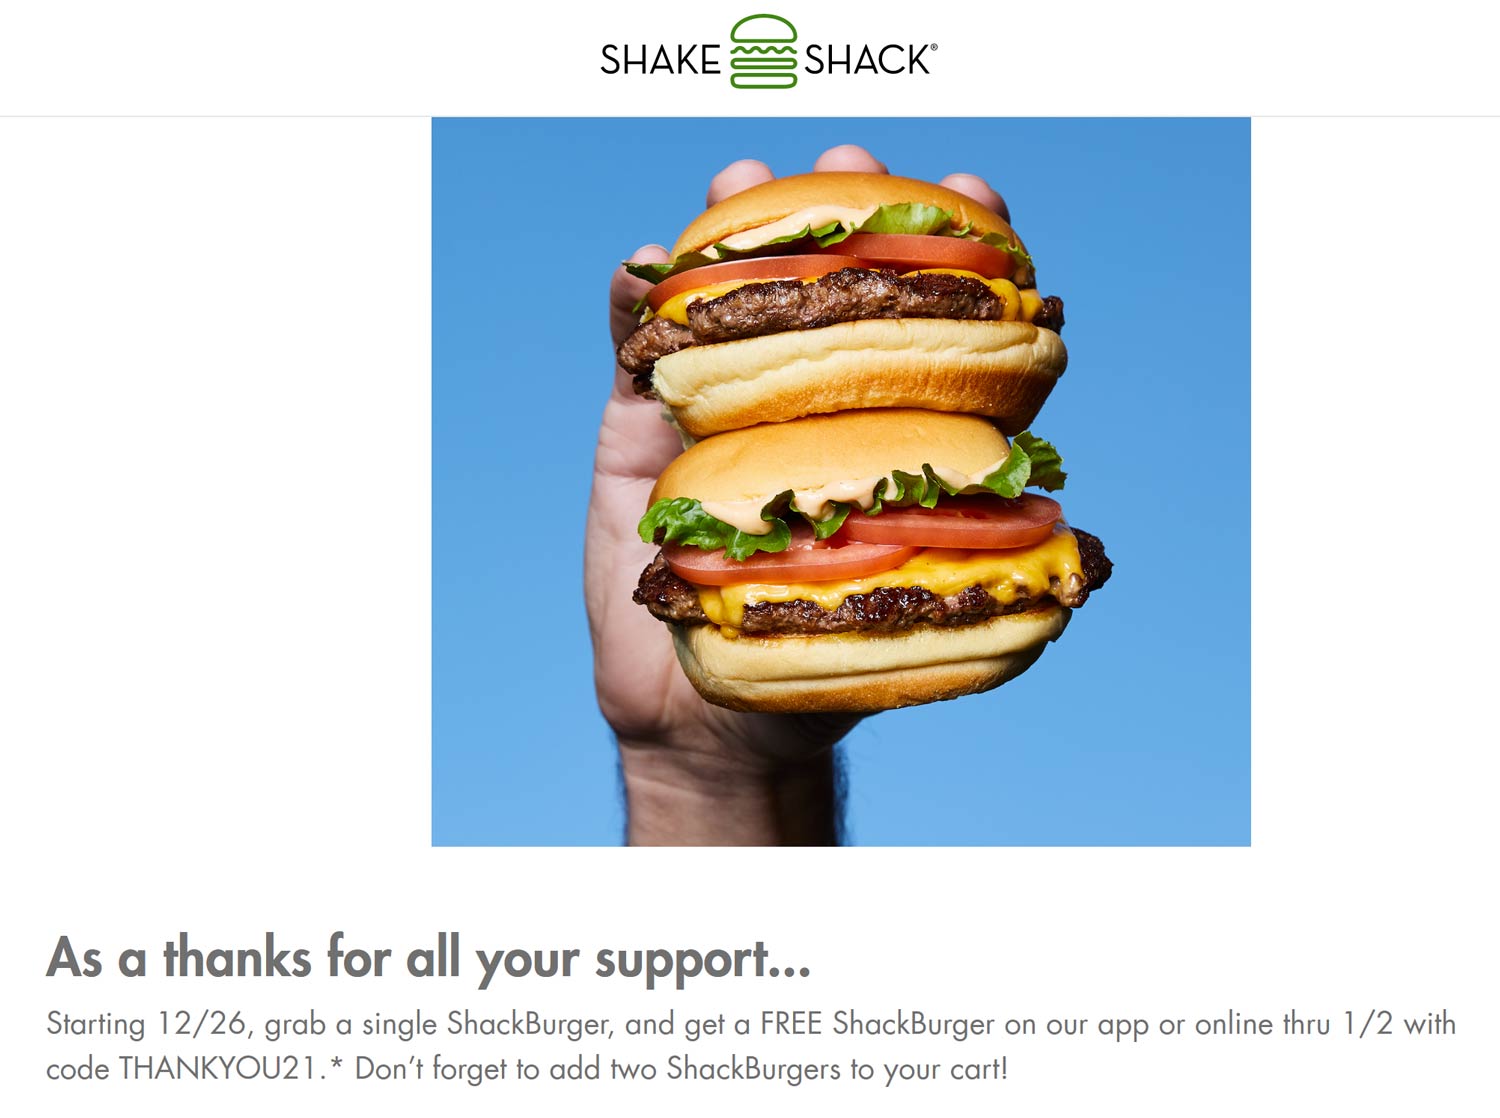 Shake Shack restaurants Coupon  Second cheeseburger free at Shake Shack promo code THANKYOU21 #shakeshack 